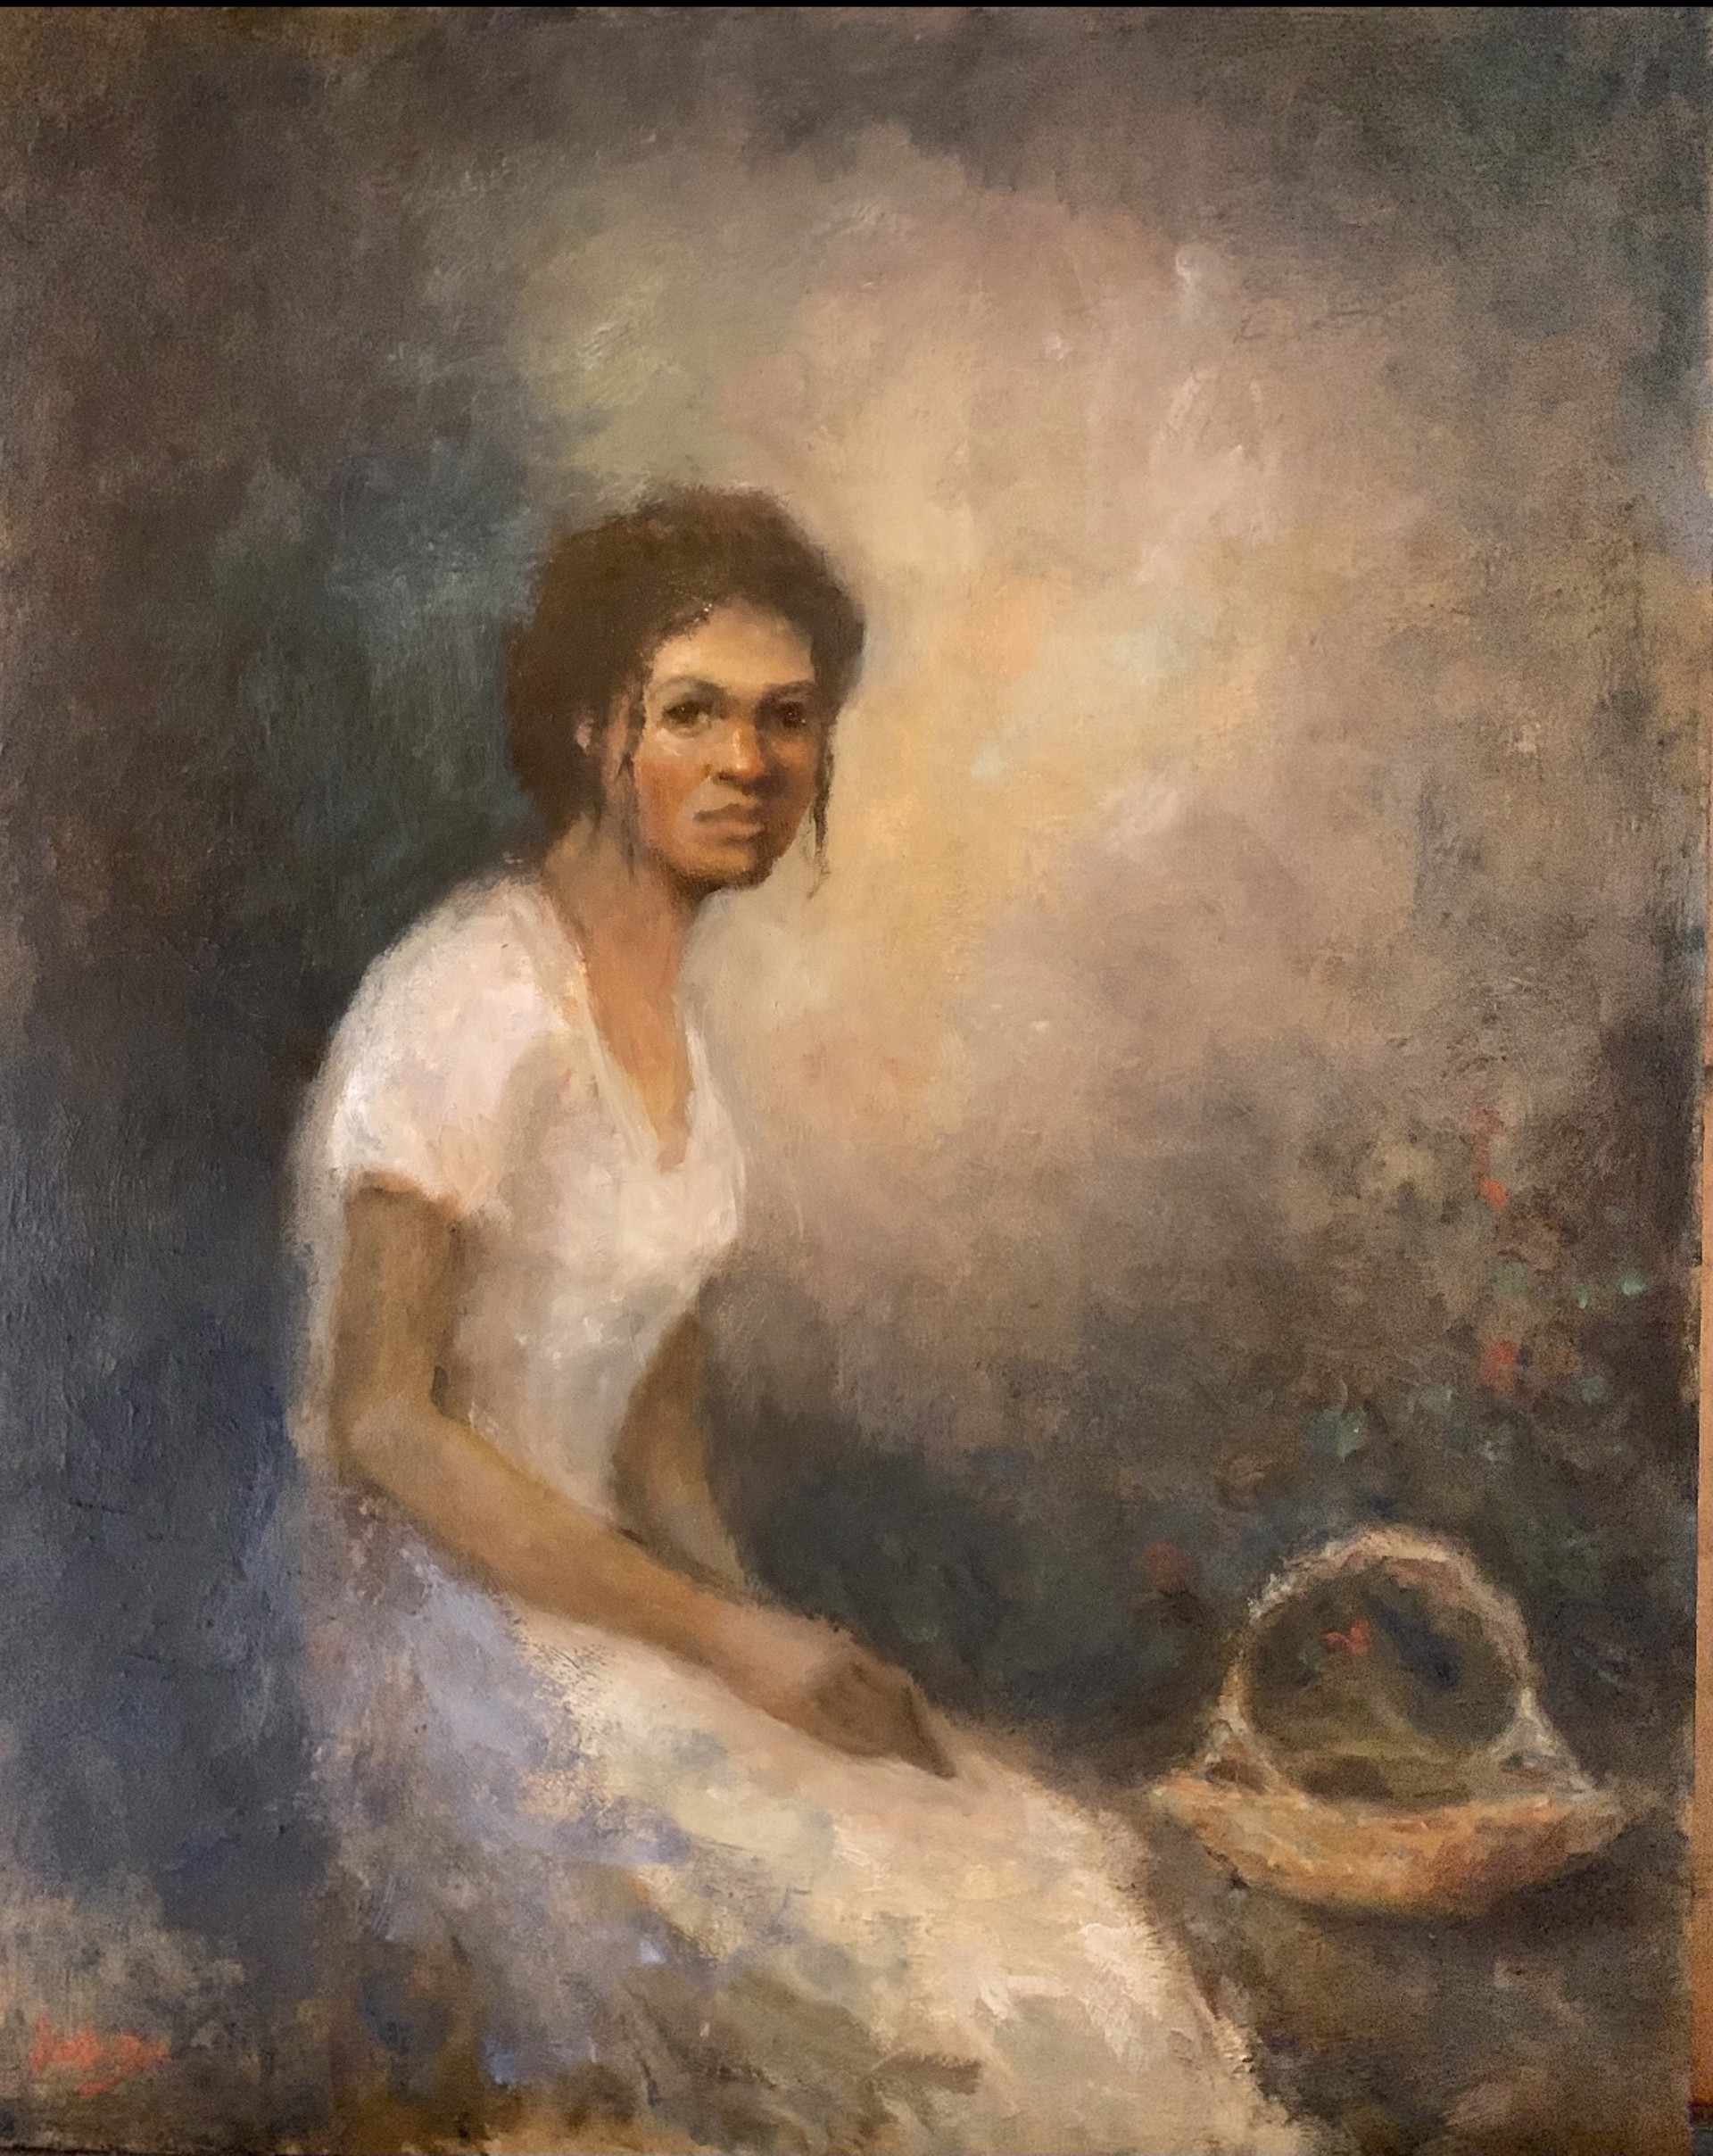 Woman With Sweetgrass Basket by Jim Darlington